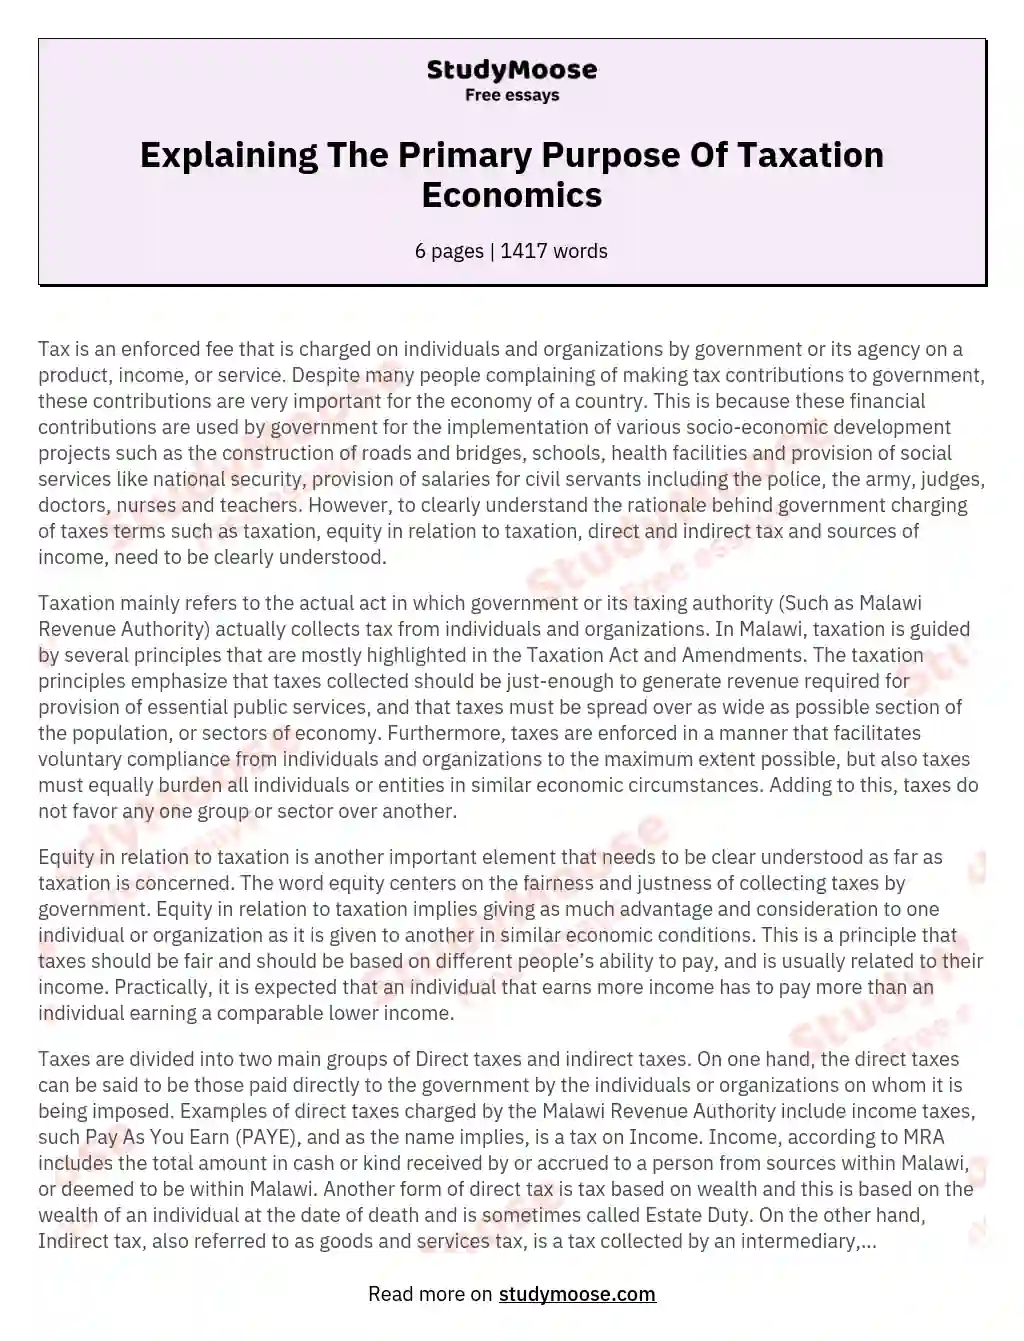 Explaining The Primary Purpose Of Taxation Economics essay